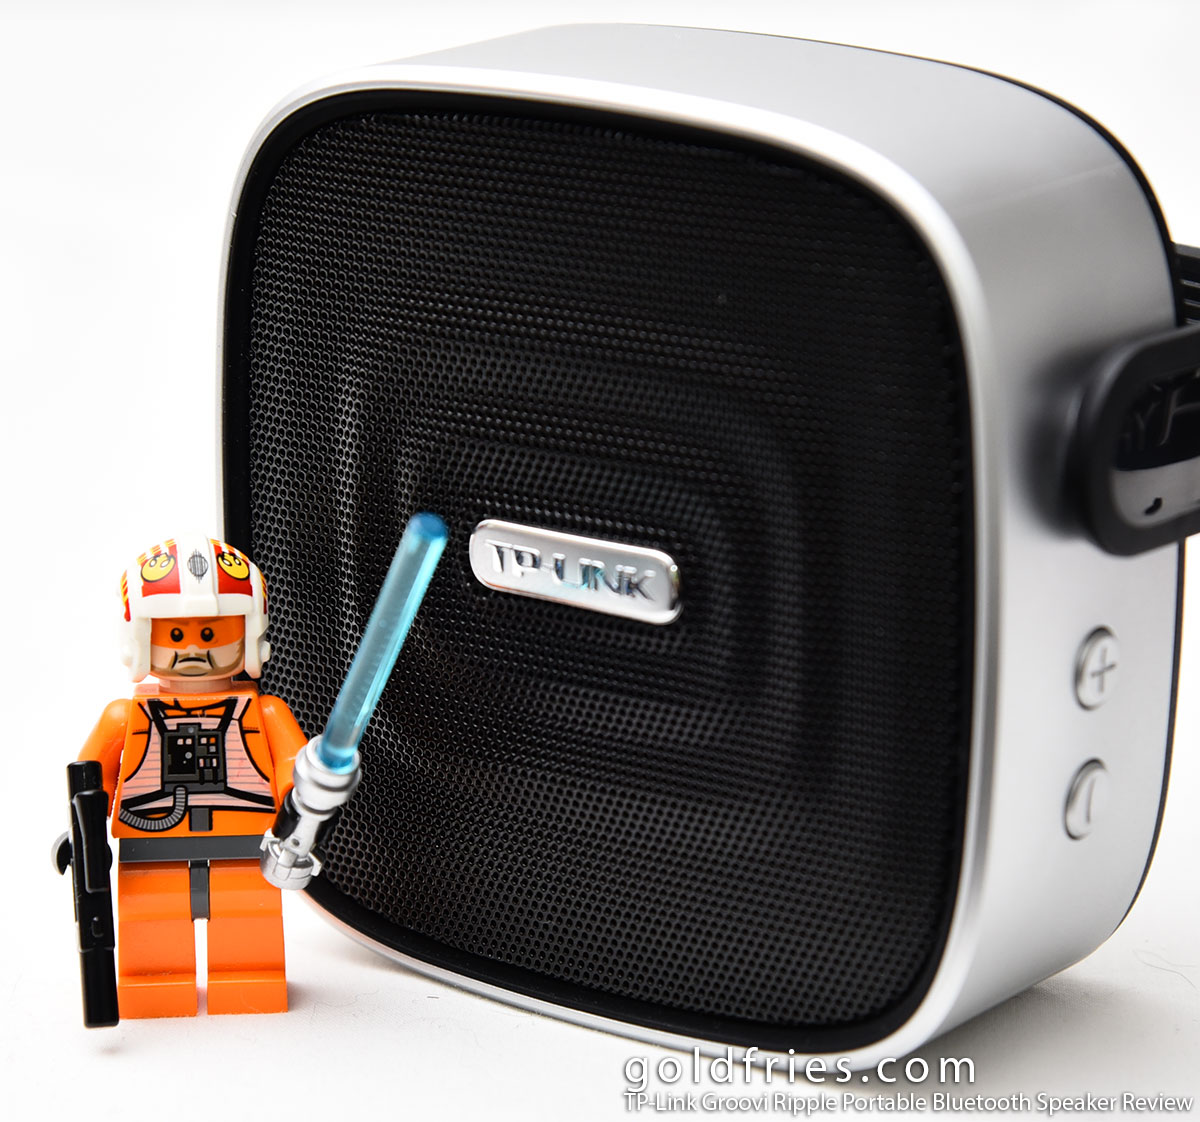 TP-Link Groovi Ripple Portable Bluetooth Speaker Review